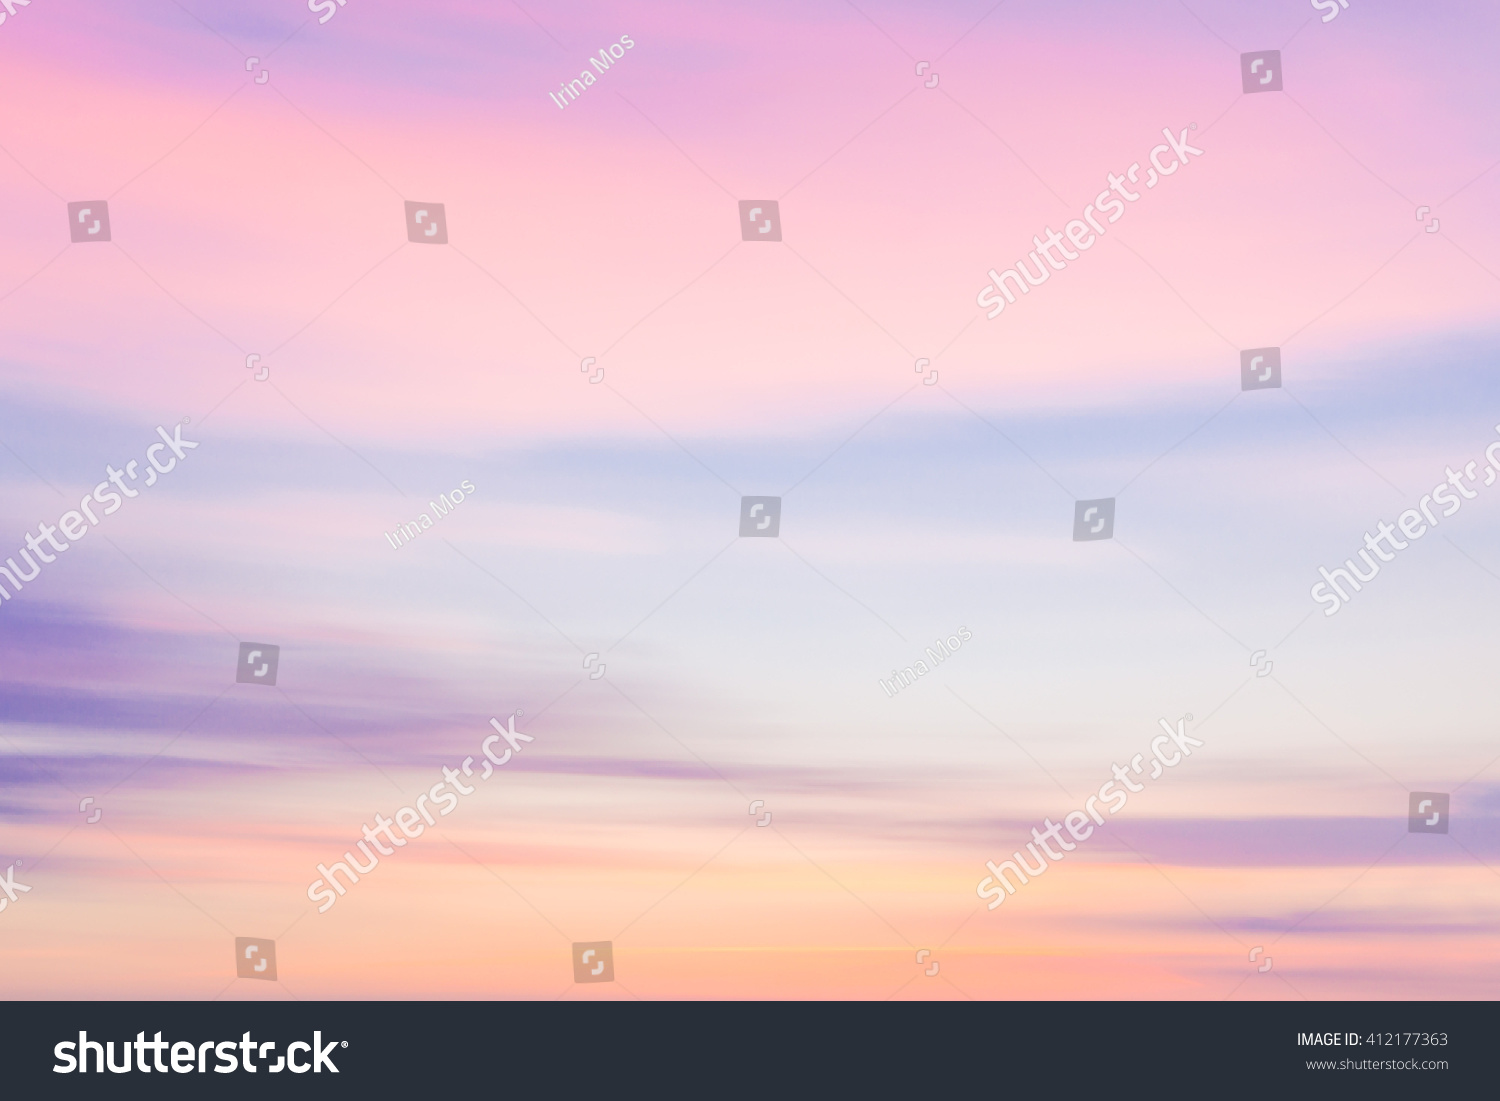 Minimalist sunset Stock Photos, Images & Photography | Shutterstock